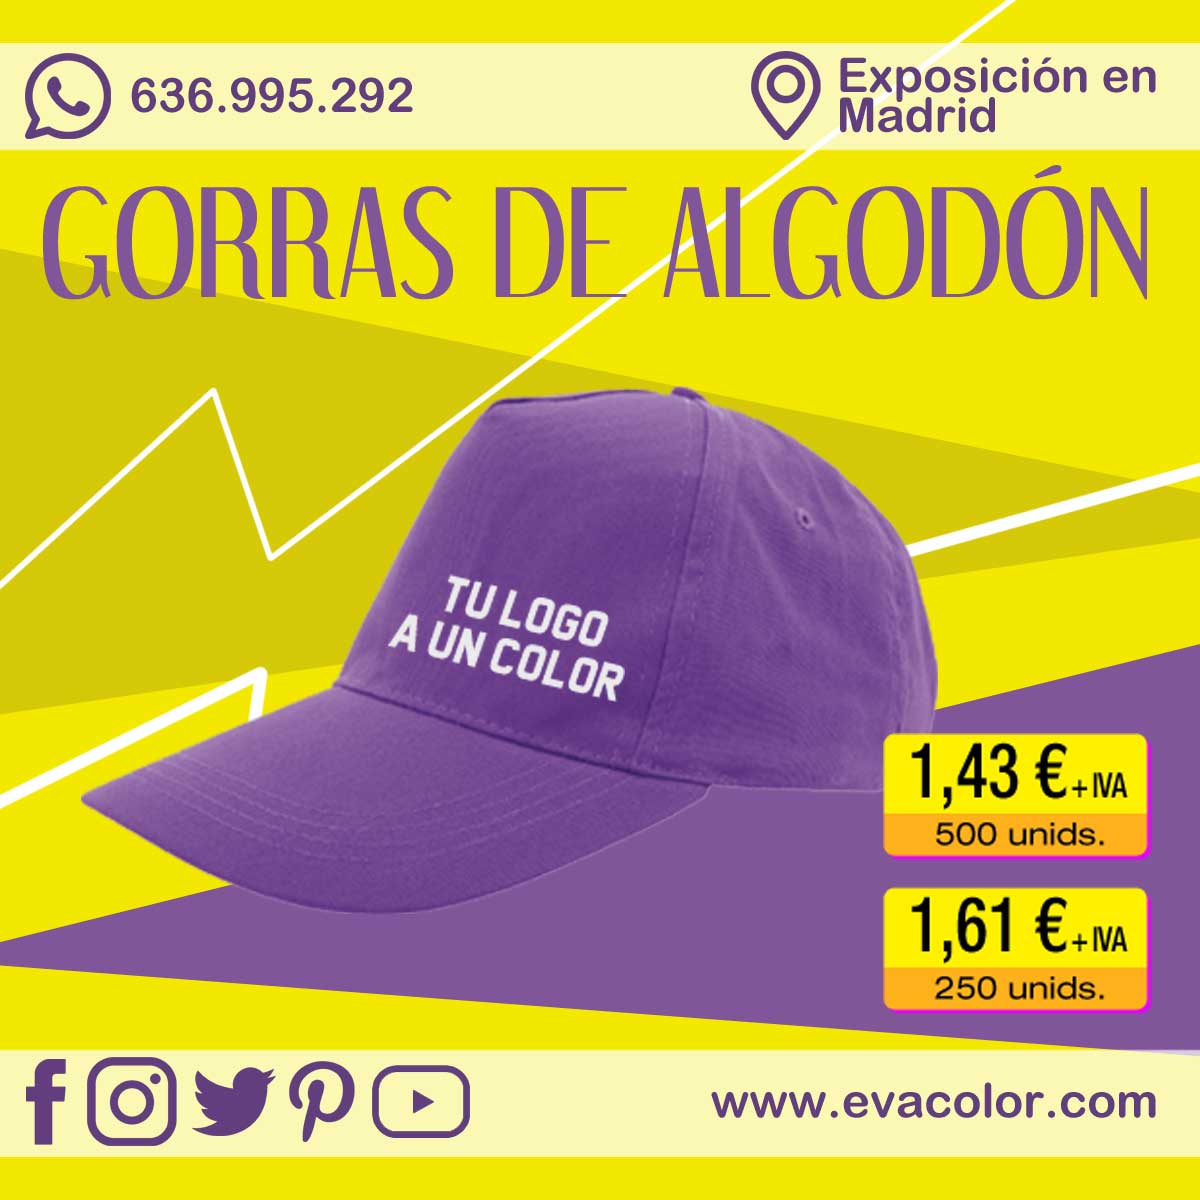 Evacolor on Twitter: "Gorras moradas con logo a un color. https://t.co/Fv3B1RW2BD https://t.co/PShAYYmcch" / Twitter